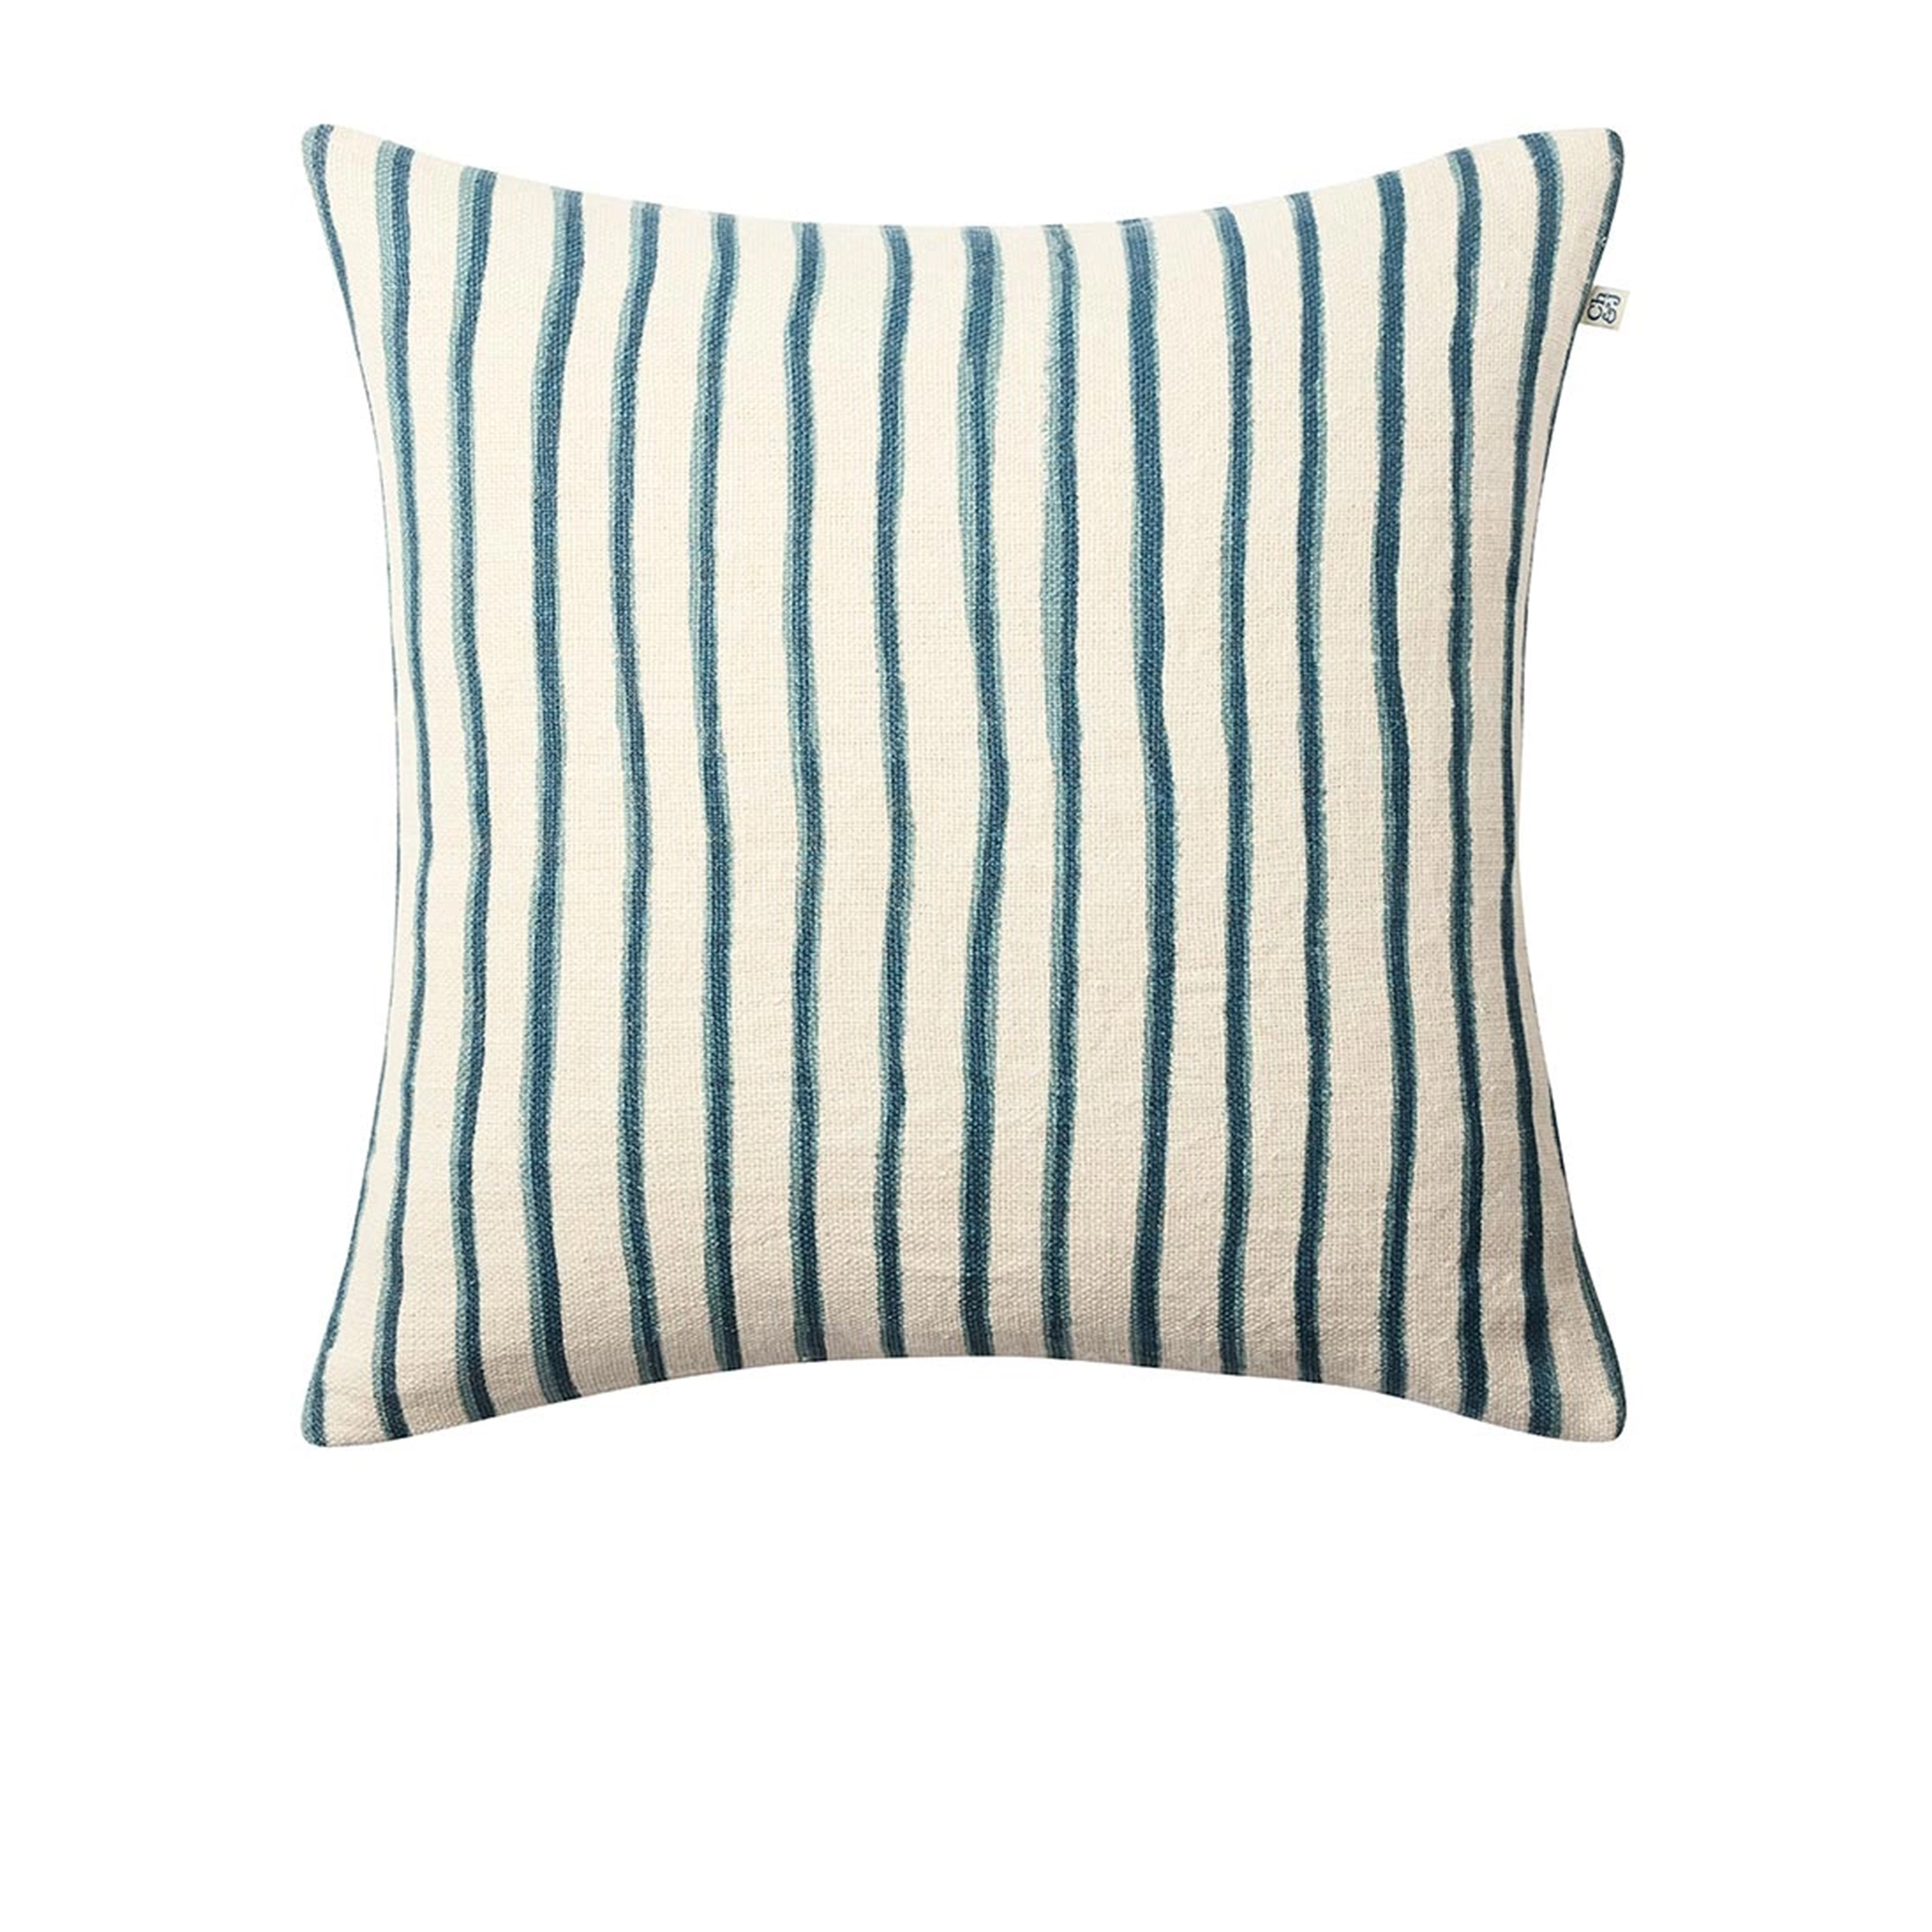 Jaipur Stripe Cushion Cover Heaven Blue/Palace Blue